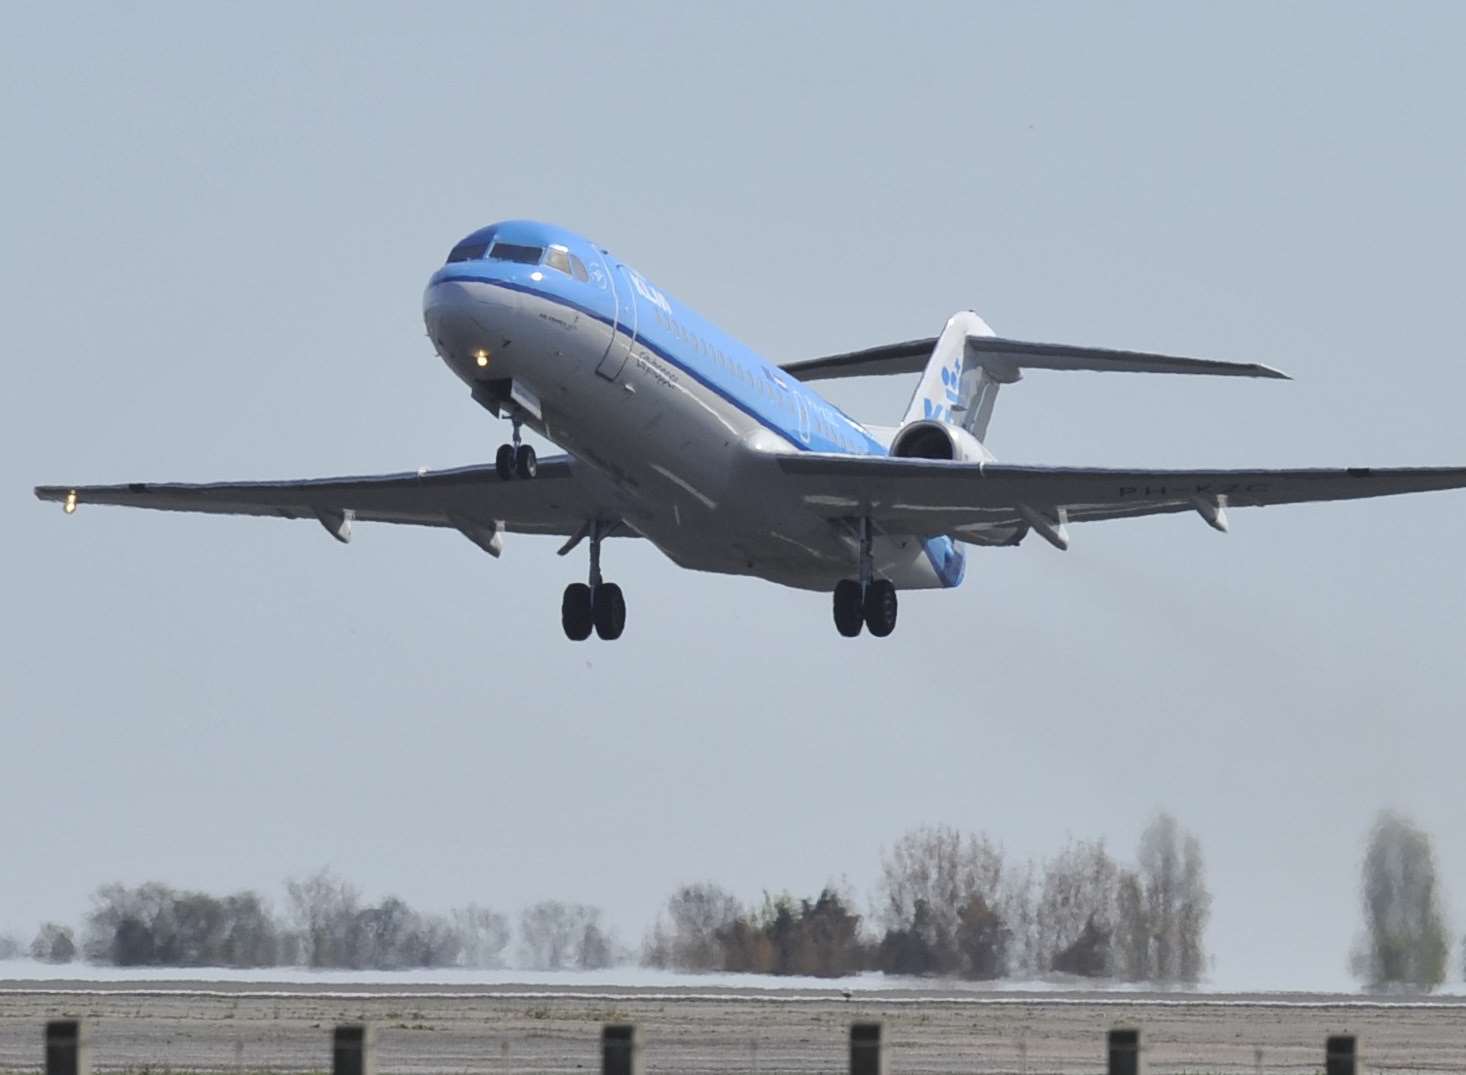 The last KLM passenger flight leaving Manston airport in 2014. Picture: Tony Flashman